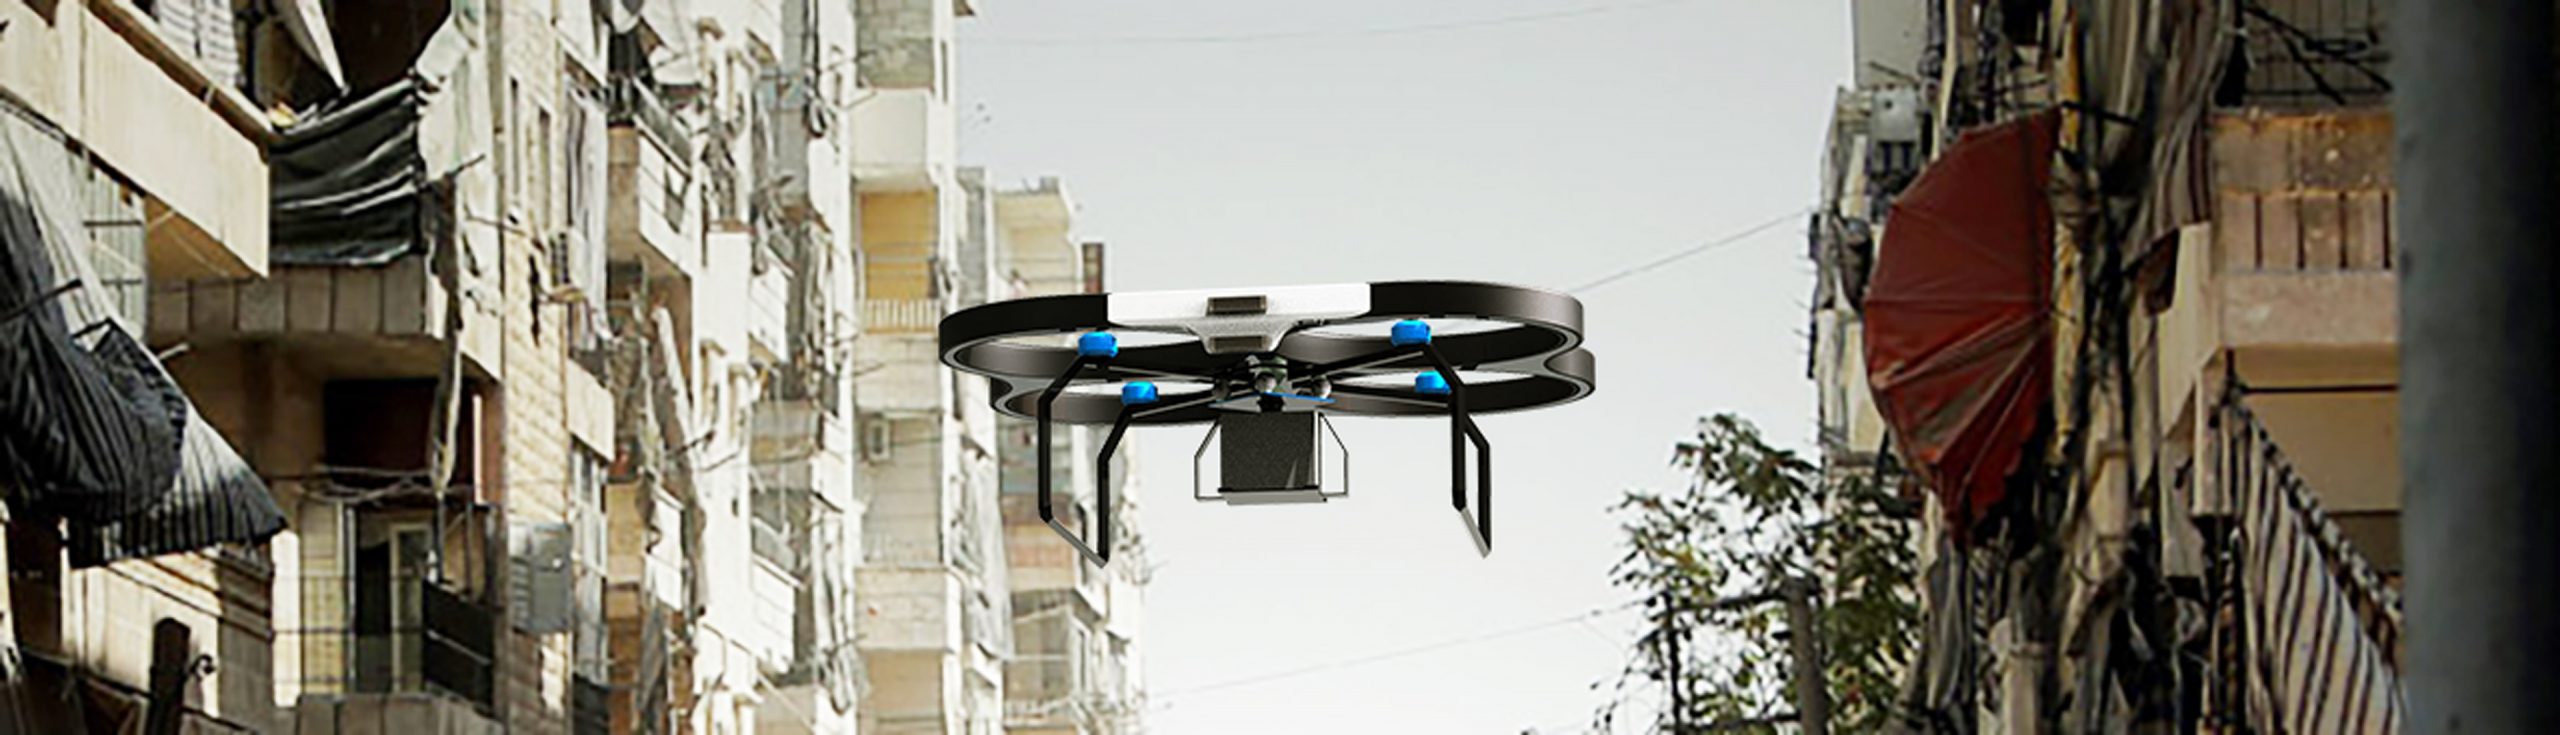 UAV, blog header image